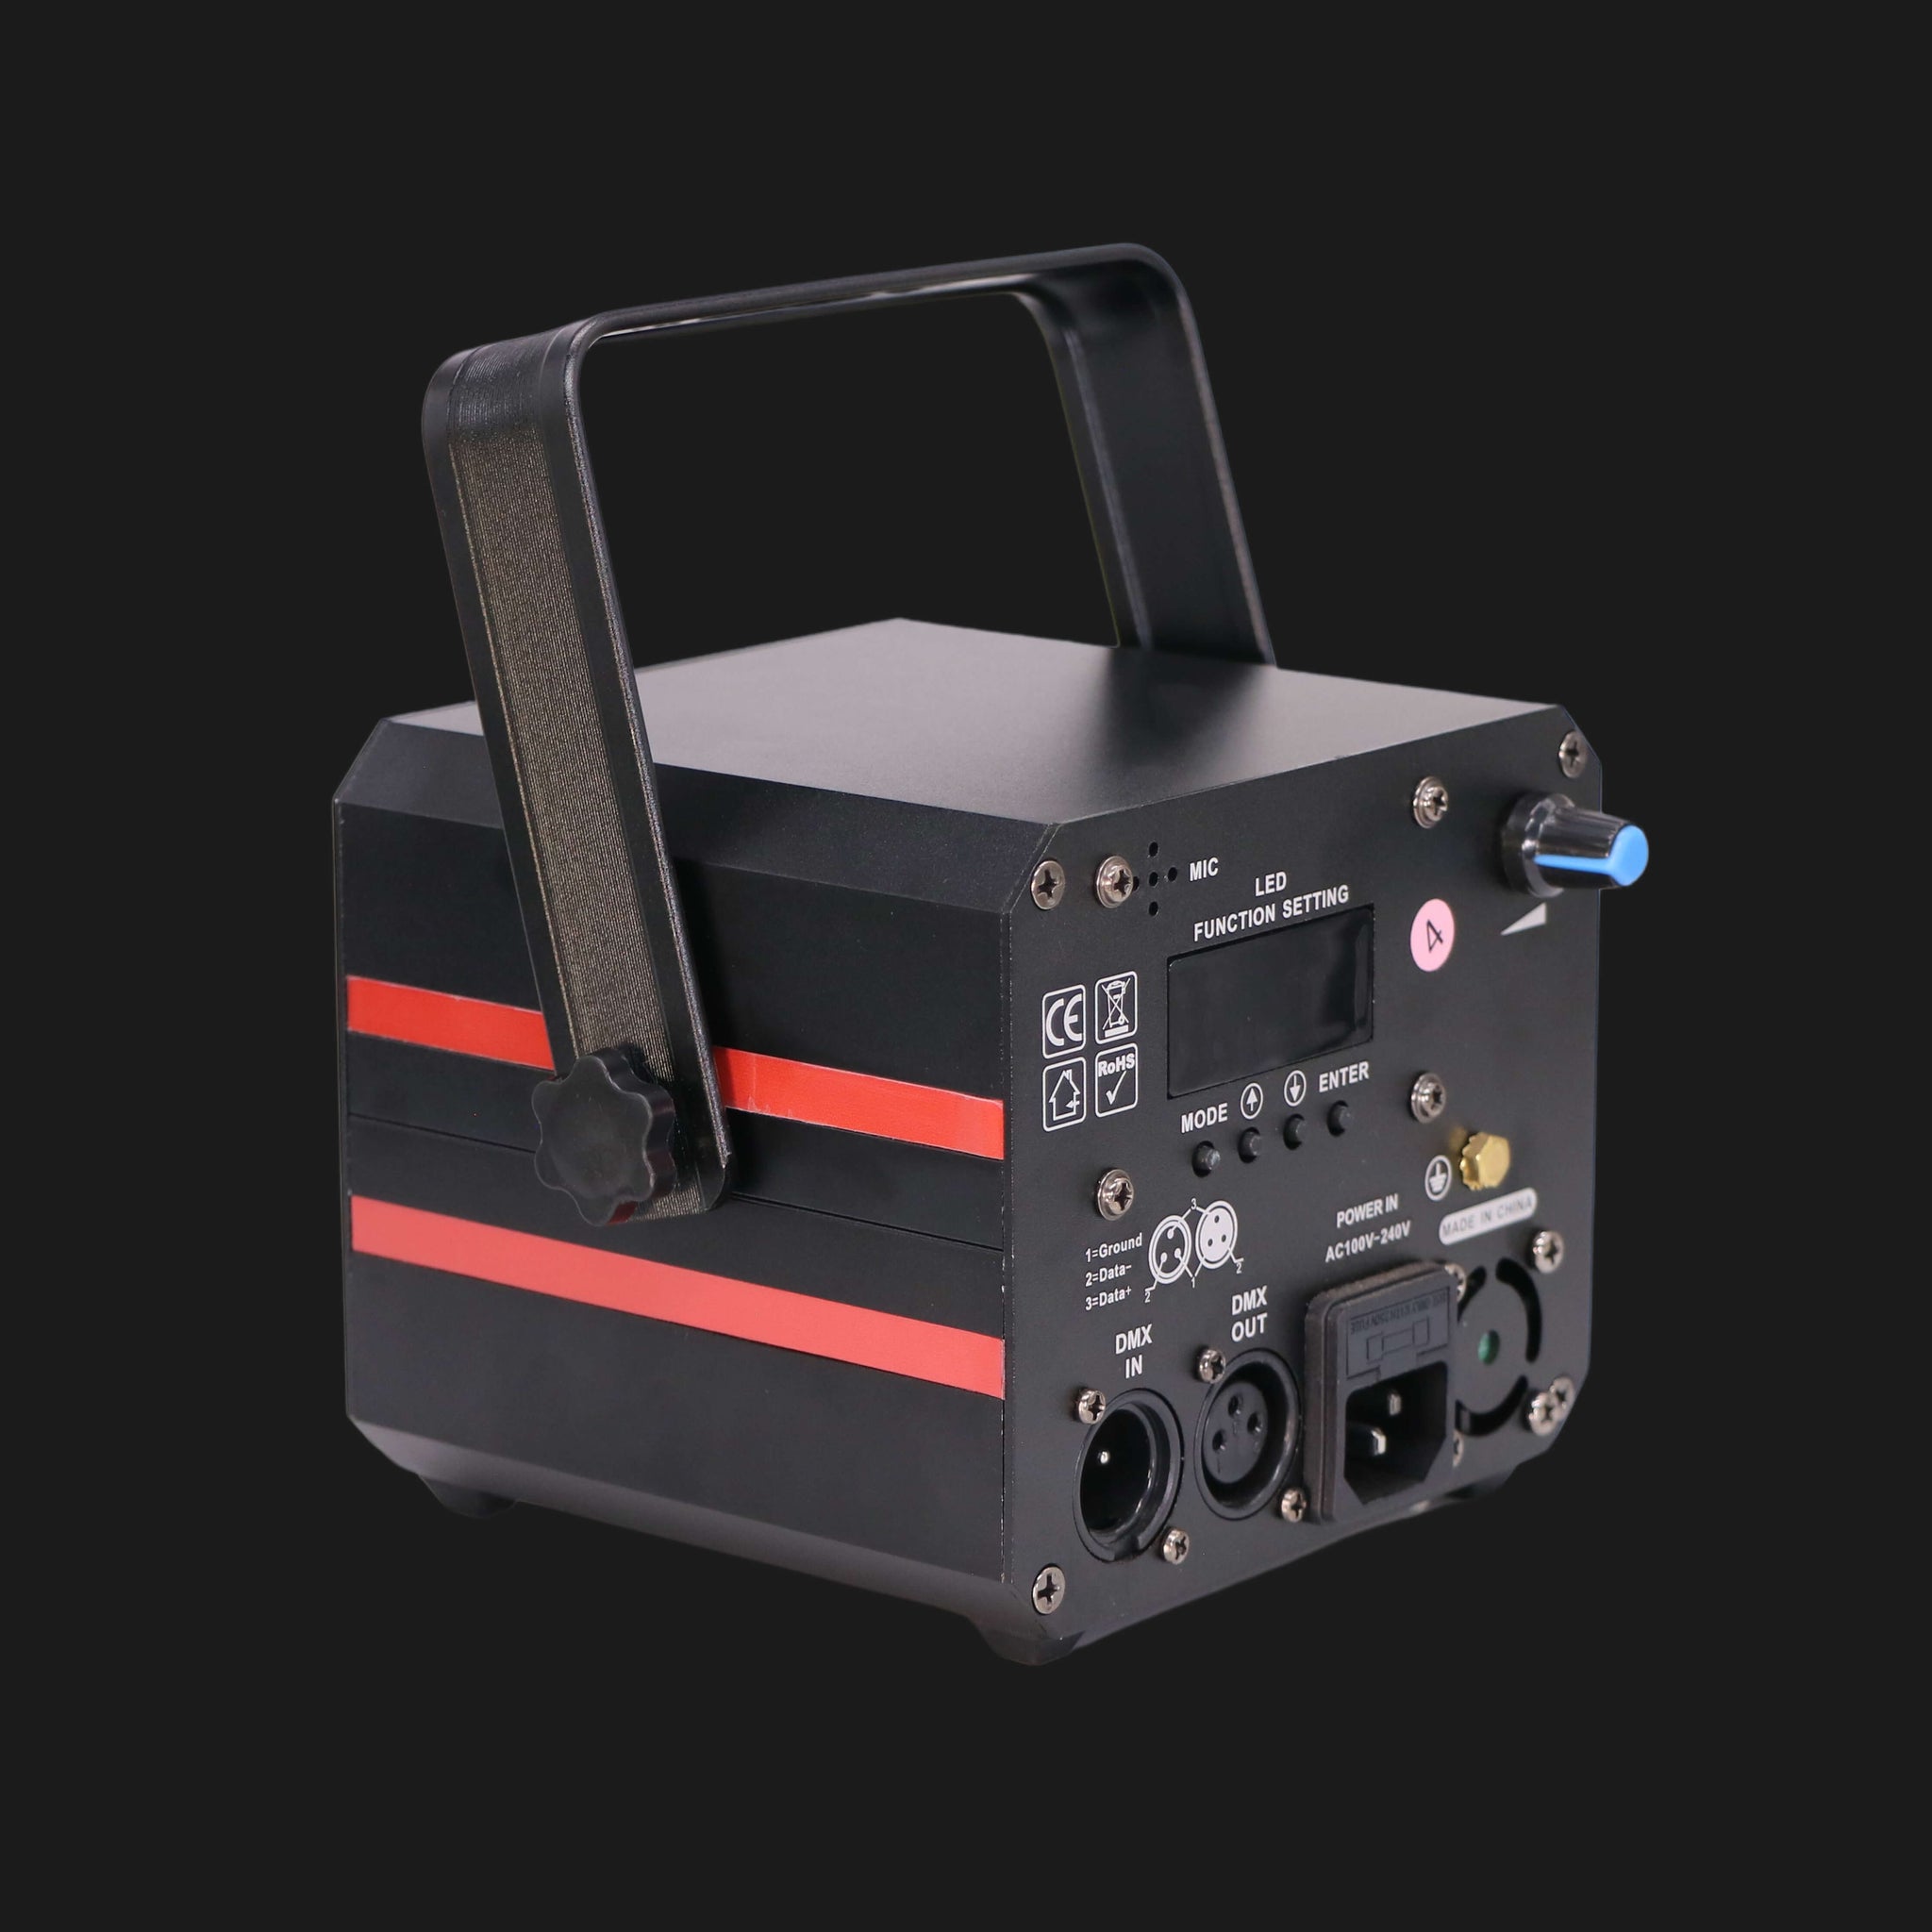 Newfeel Lasers Black Cube APP Remote Control DJ Laser Light